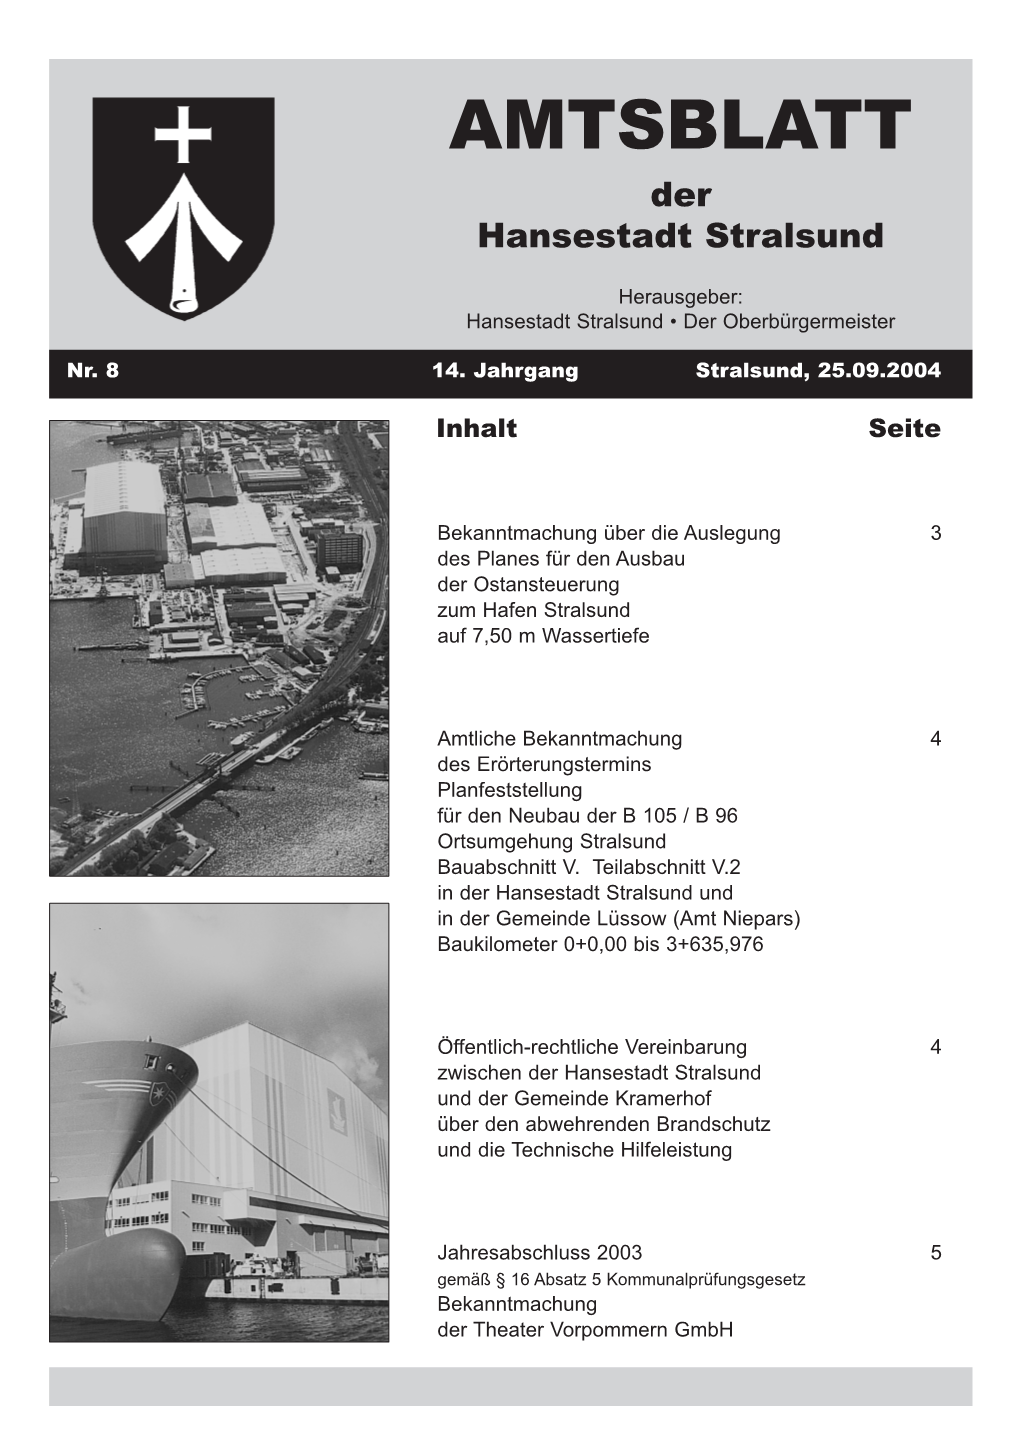 AMTSBLATT Der Hansestadt Stralsund